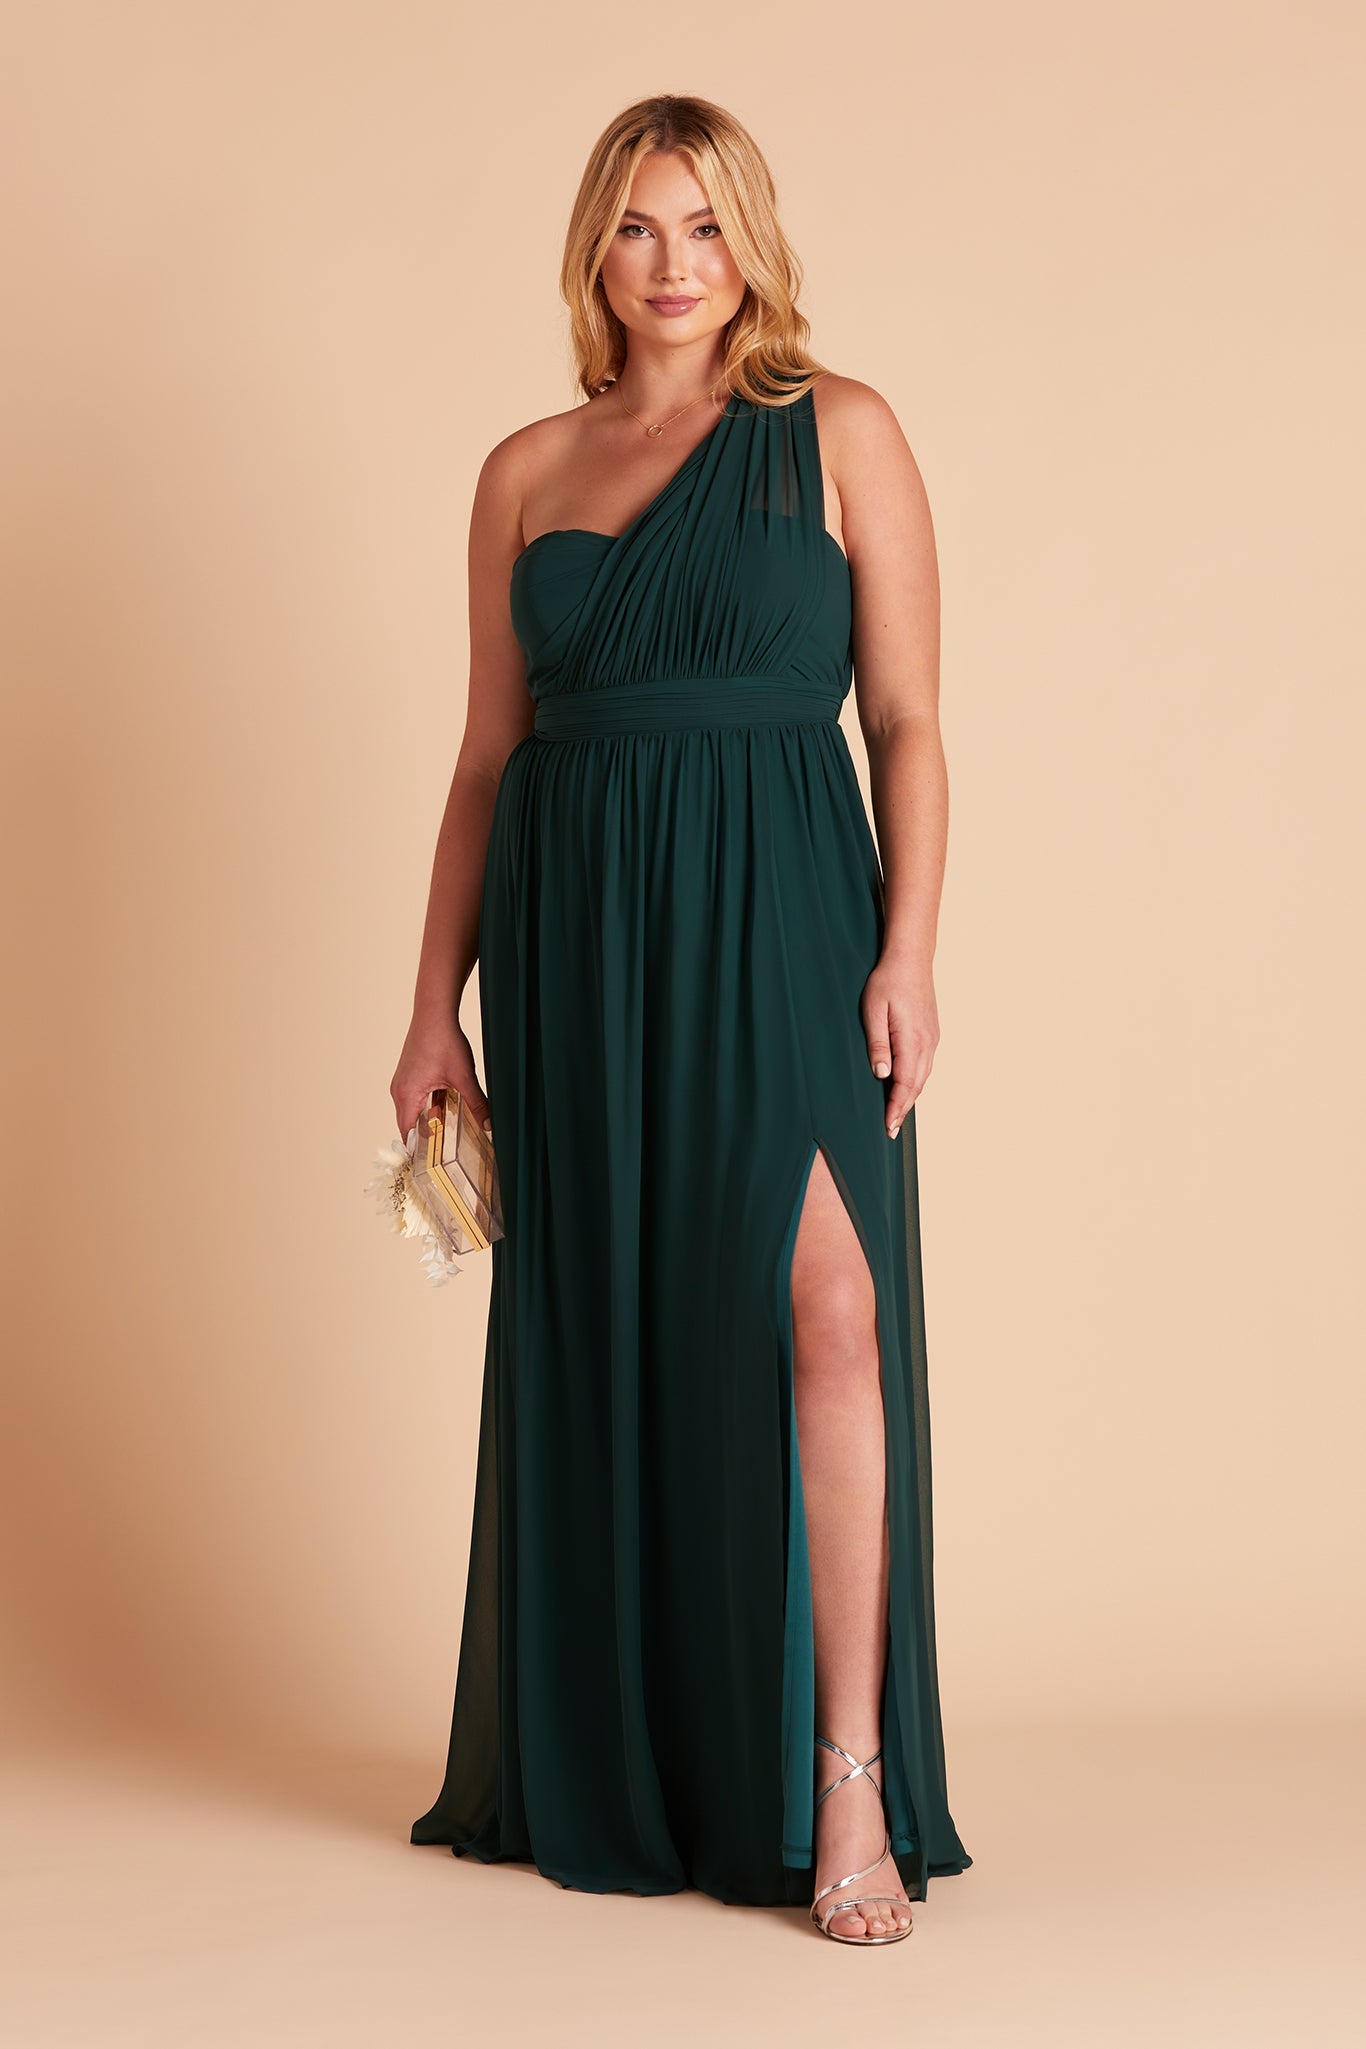 Grace Convertible Chiffon Bridesmaid Dress in Emerald